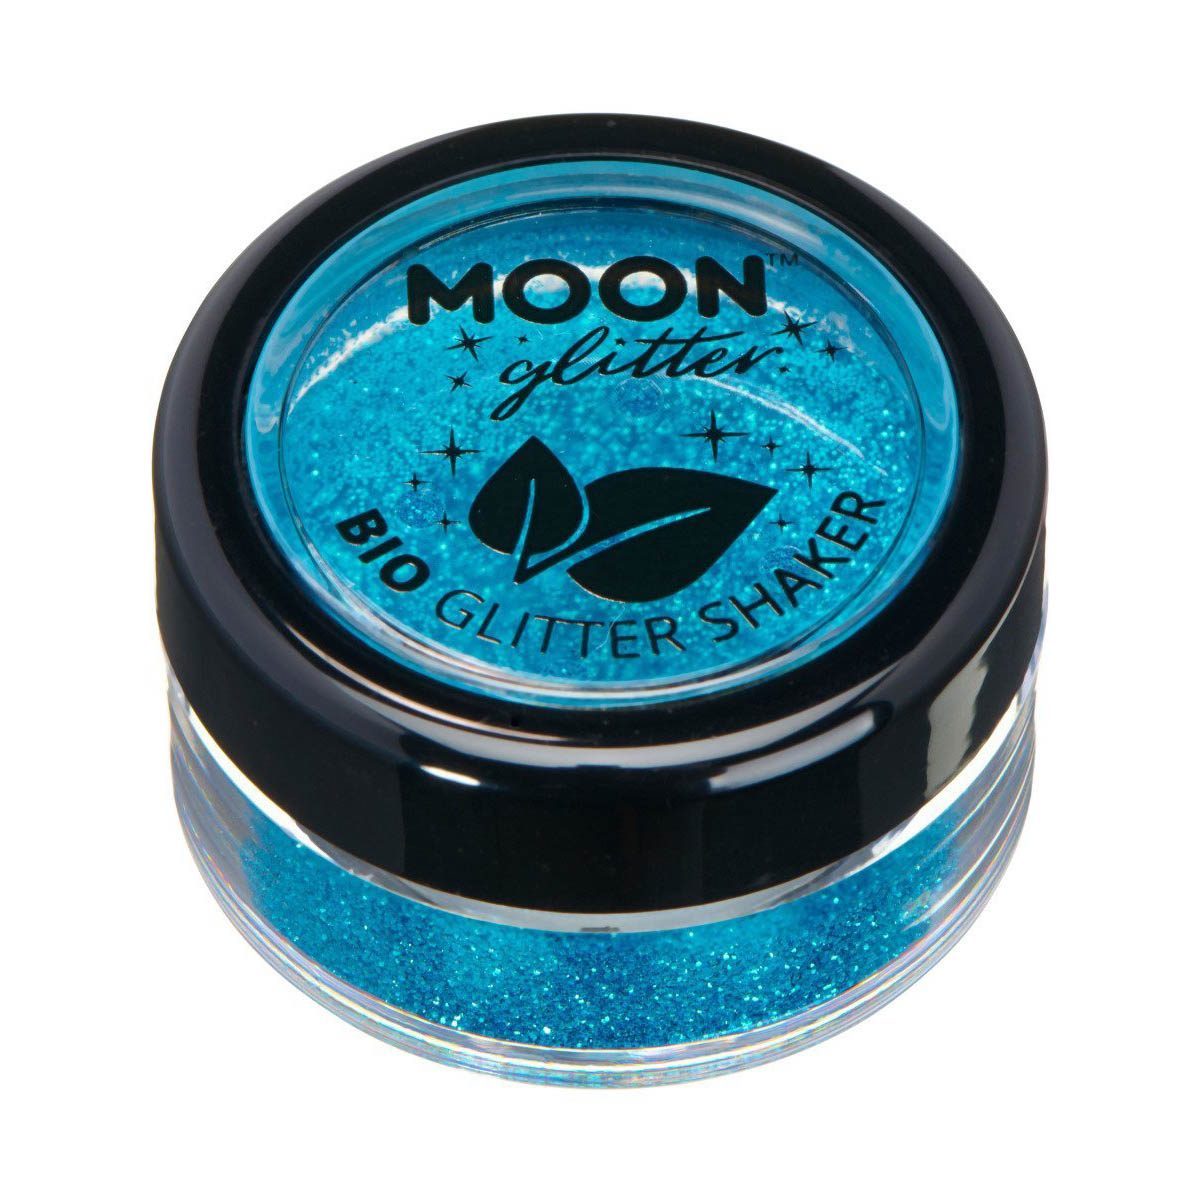 Moon glitter bio finkornigt shakers, 5g Blå